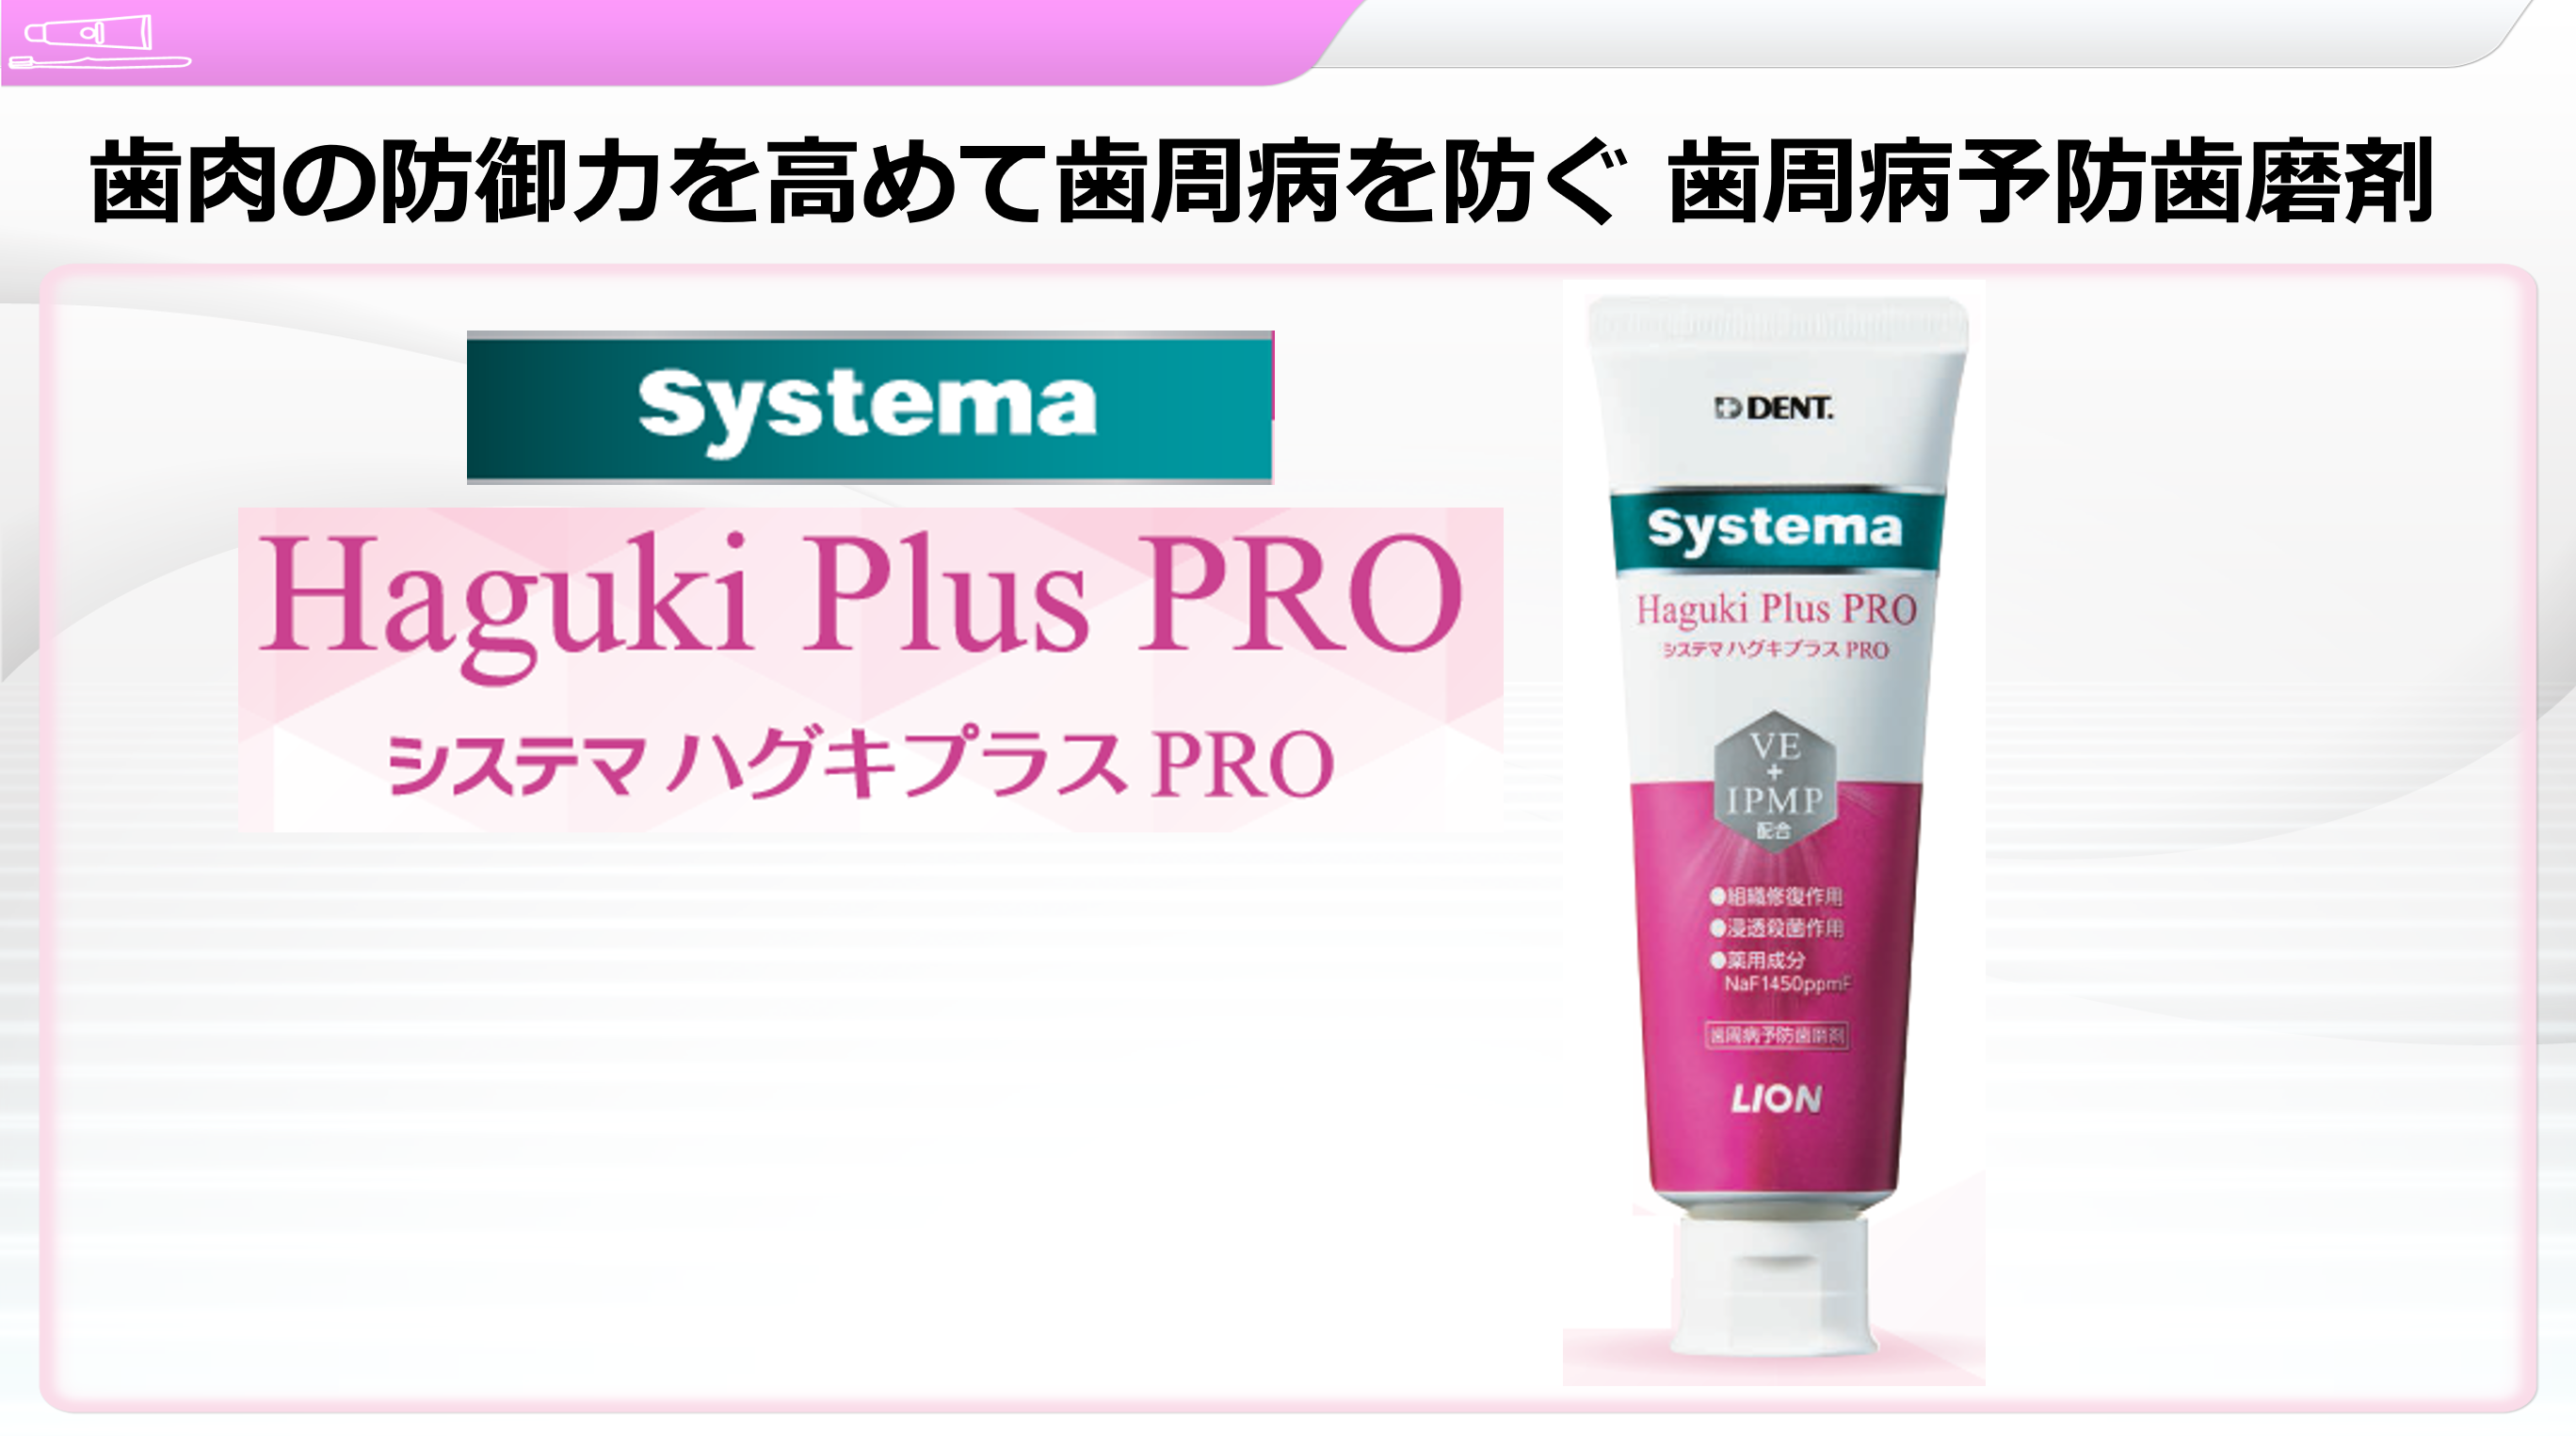 Systema Haguki Plus PRO